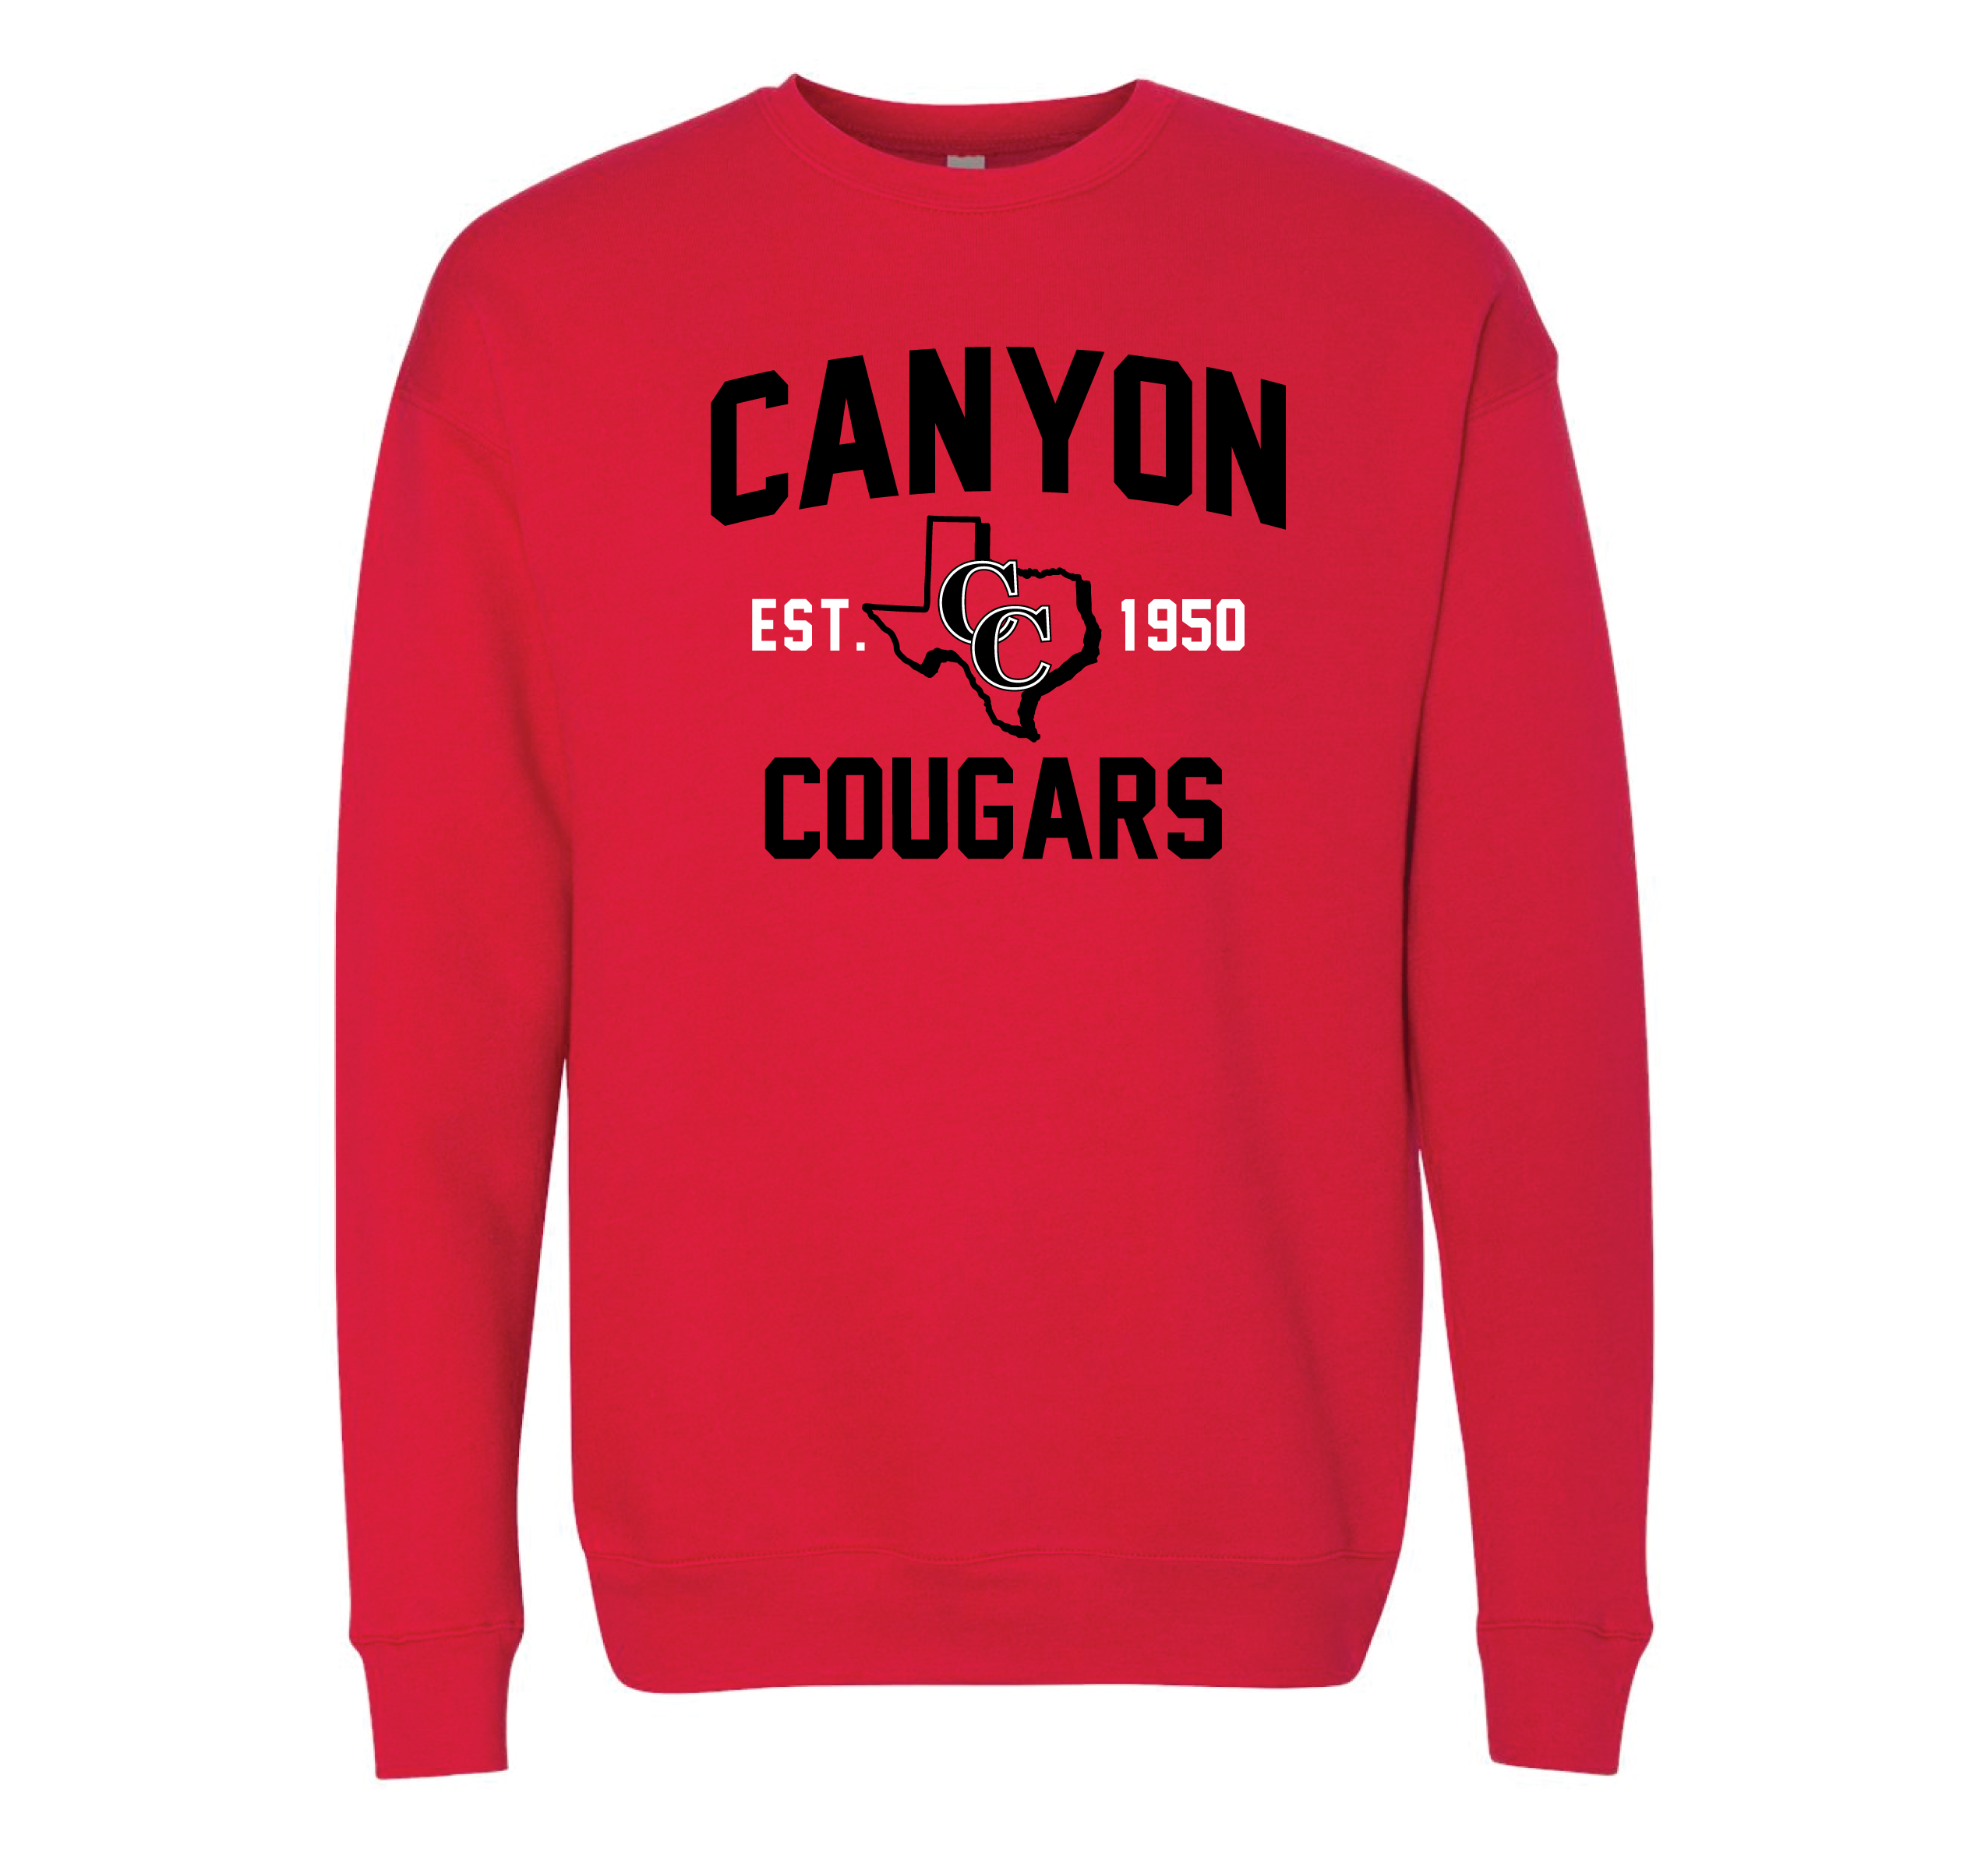 Canyon Cougars Sweatshirt